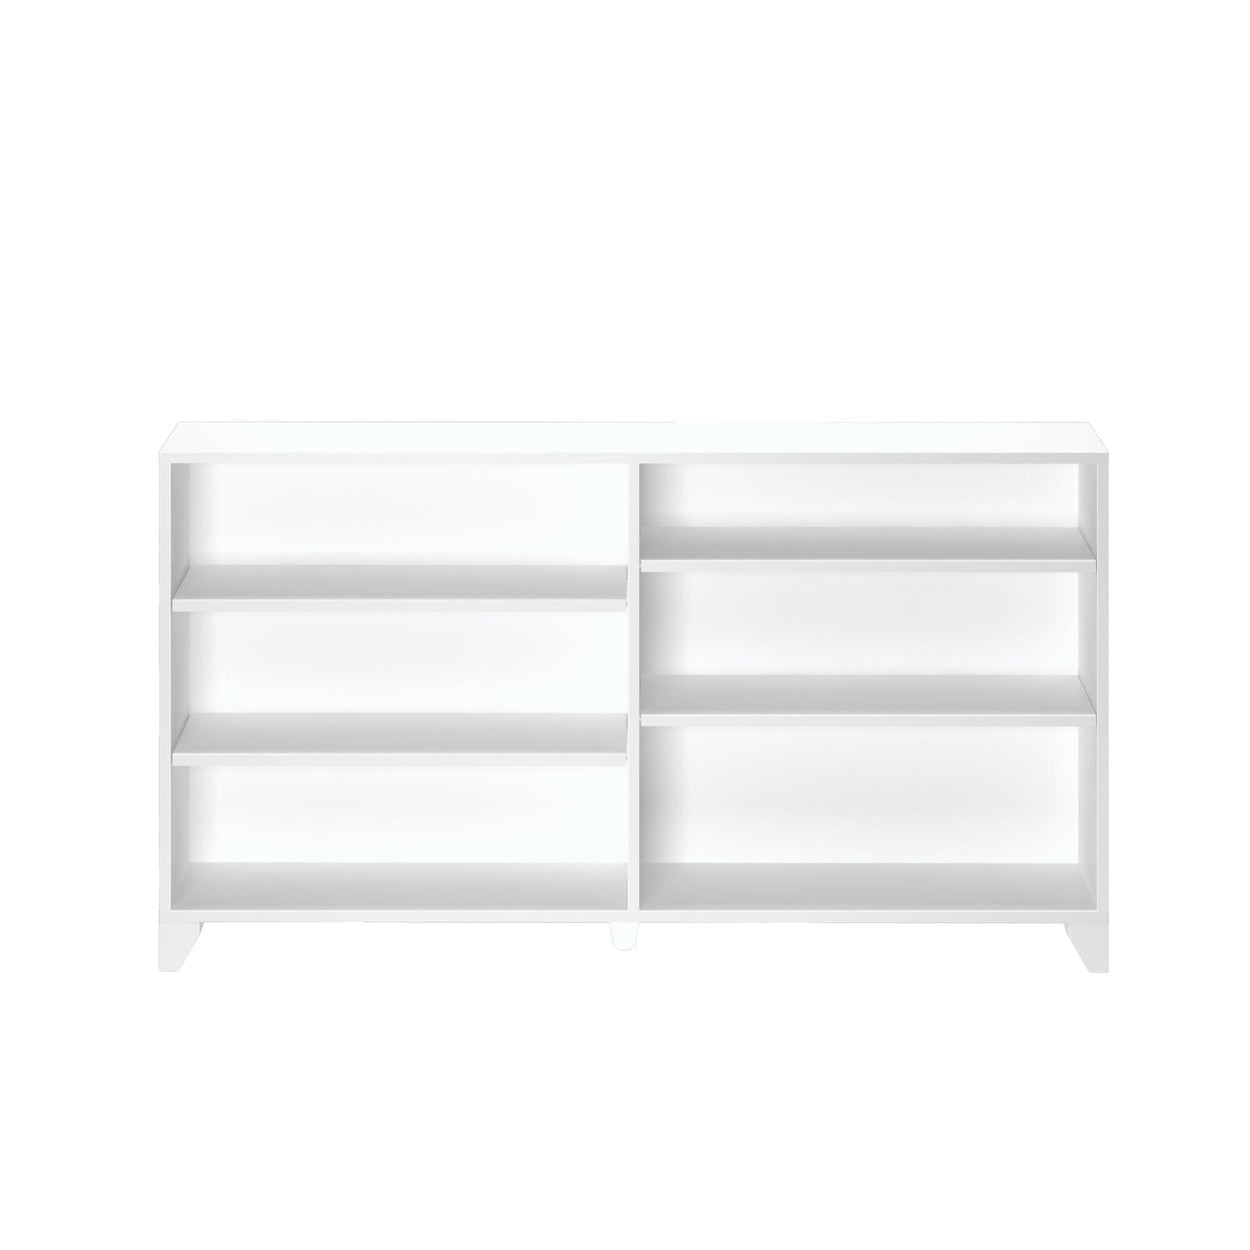 184760-002 : Furniture Classic 6-Shelf Bookcase, White